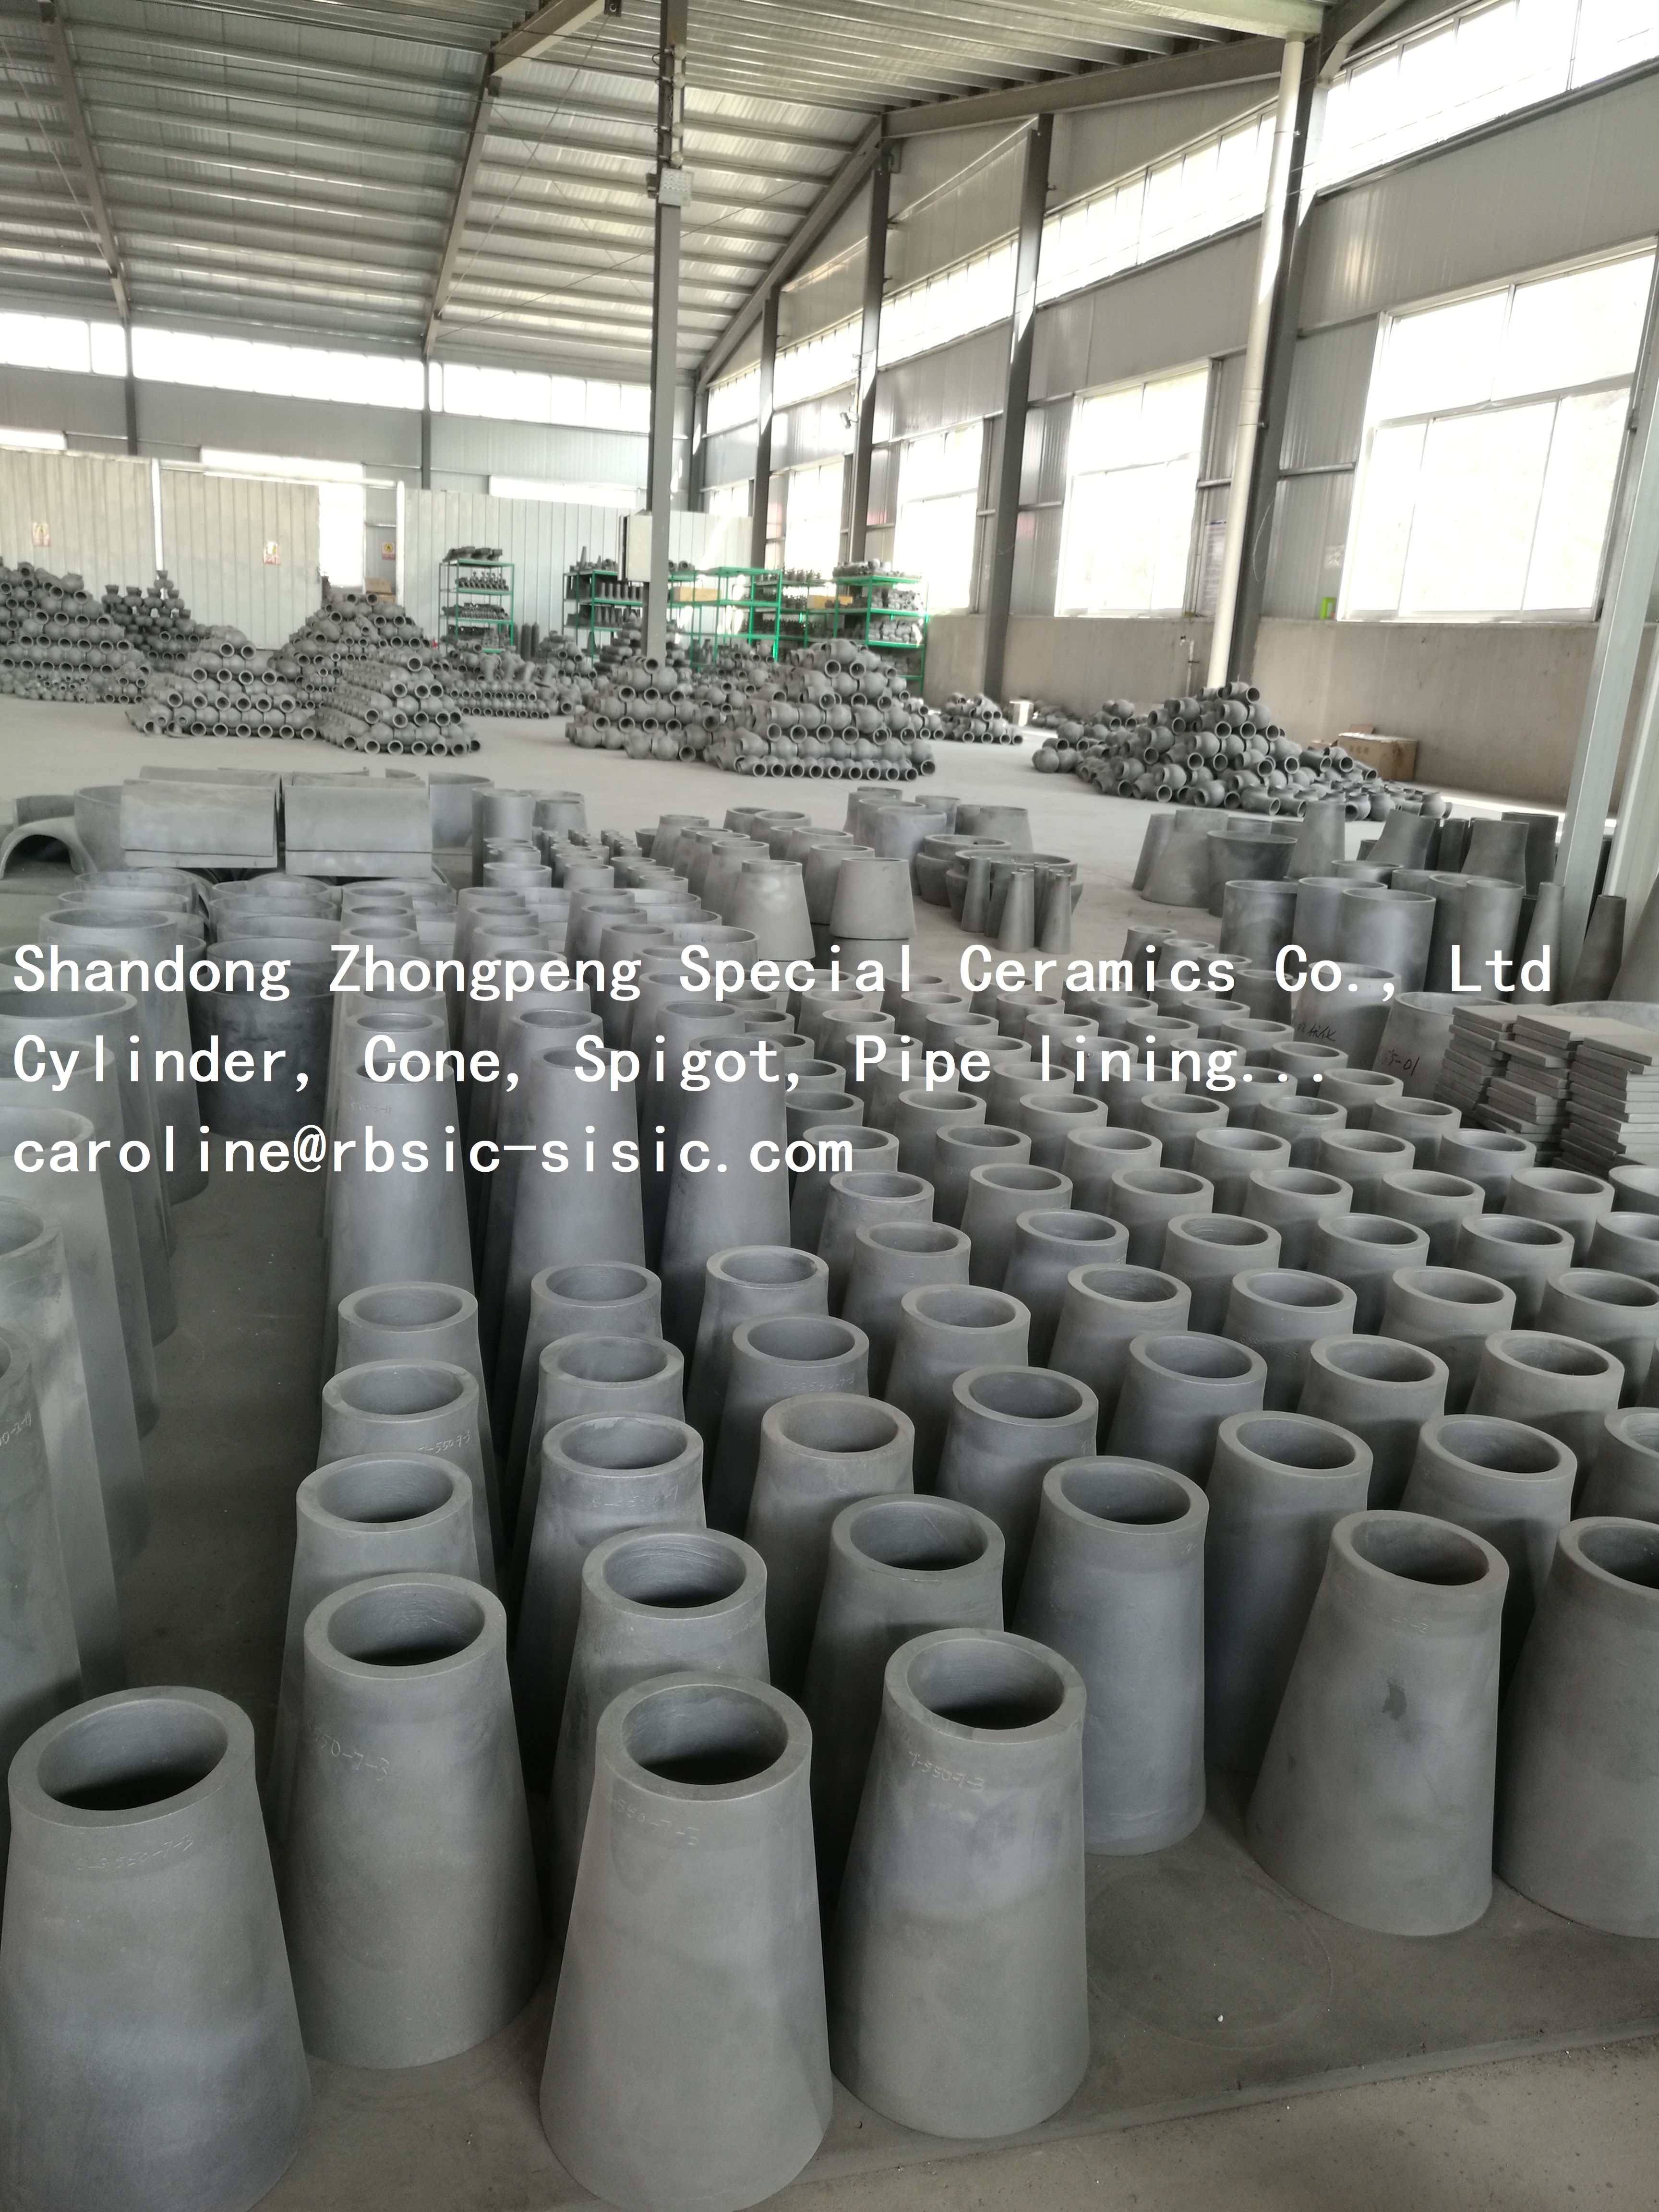 Super wear resistant silicon carbide RBSC cylinder, cone, spigot manufacturer